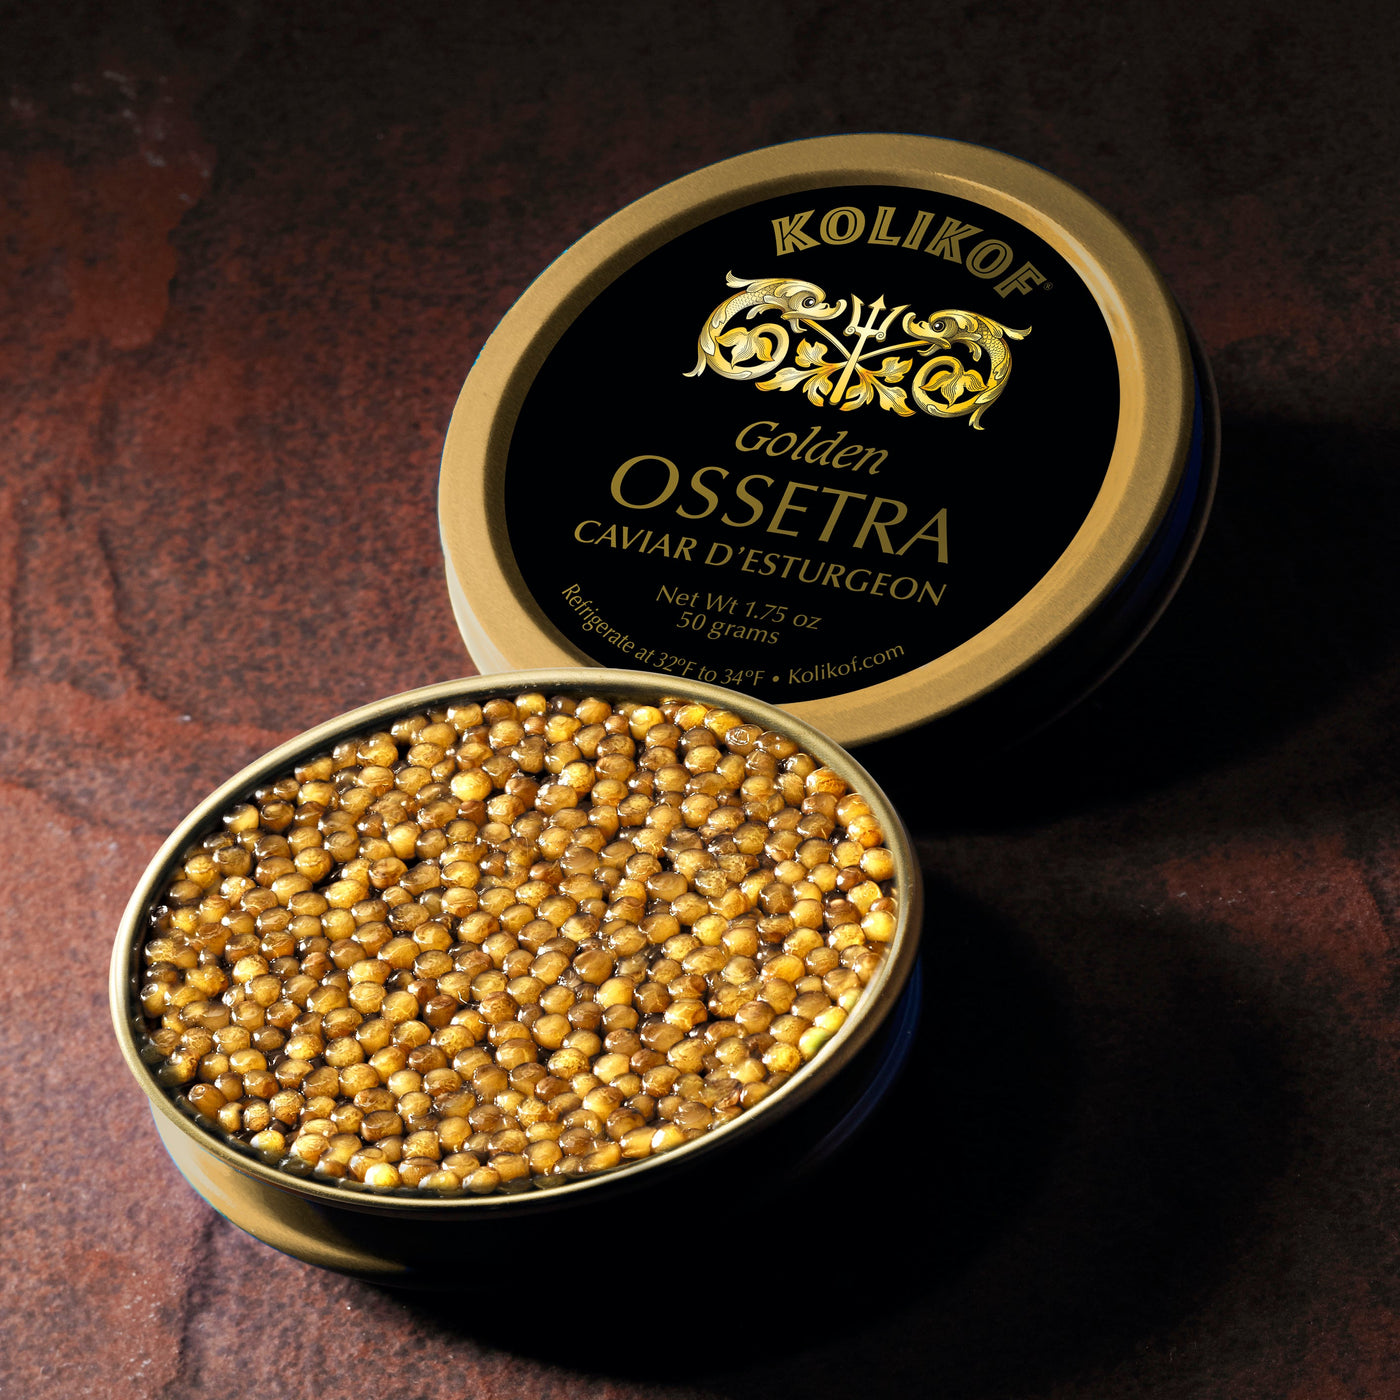 Golden Osetra (or Ossetra) Caviar by Kolikof